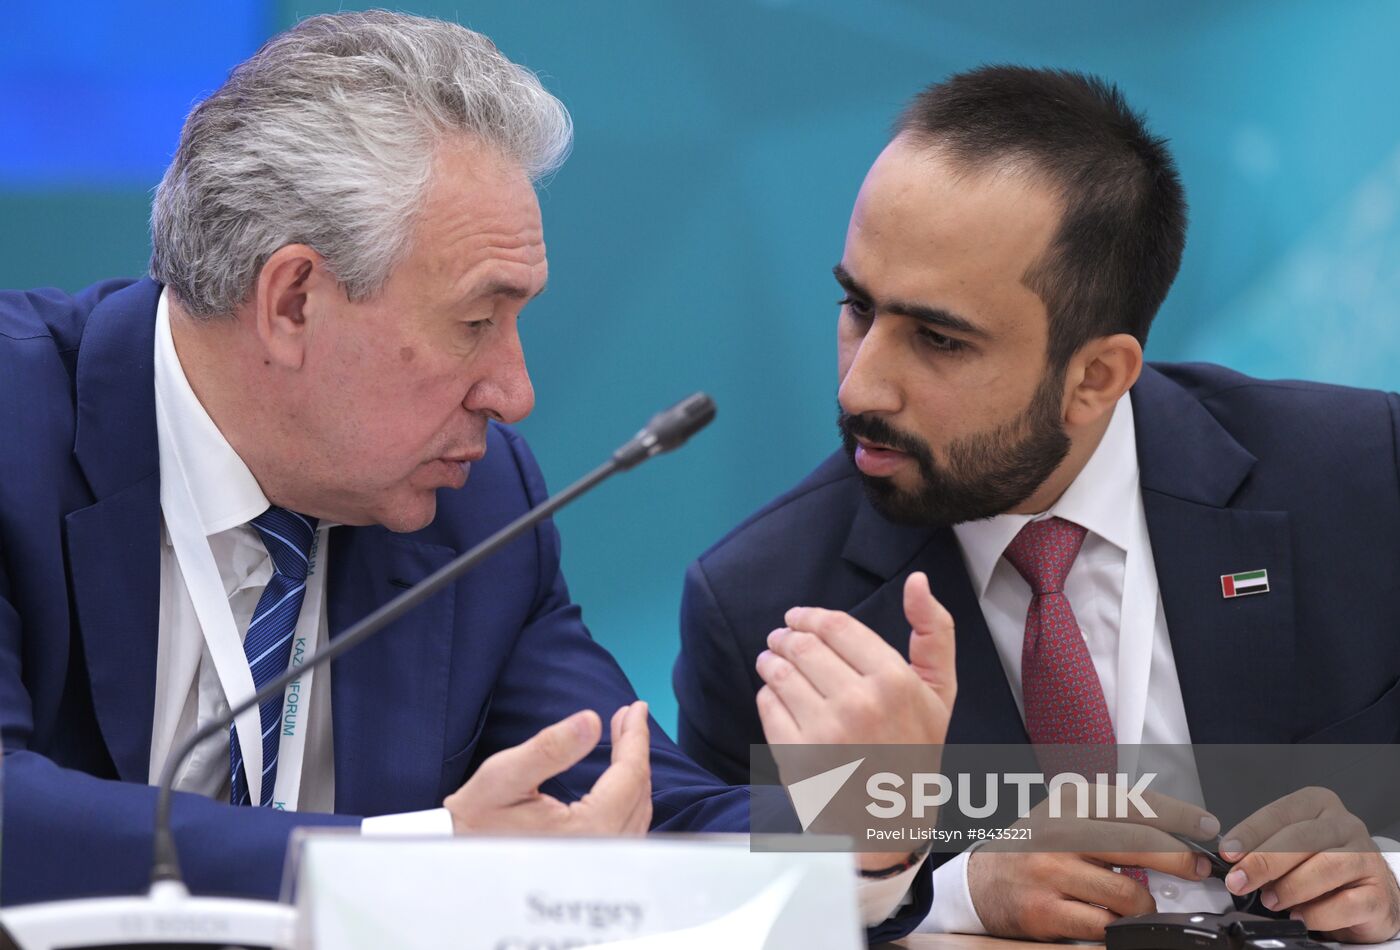 KAZANFORUM 2023. Interparliamentary Hearings Russia-Islamic World